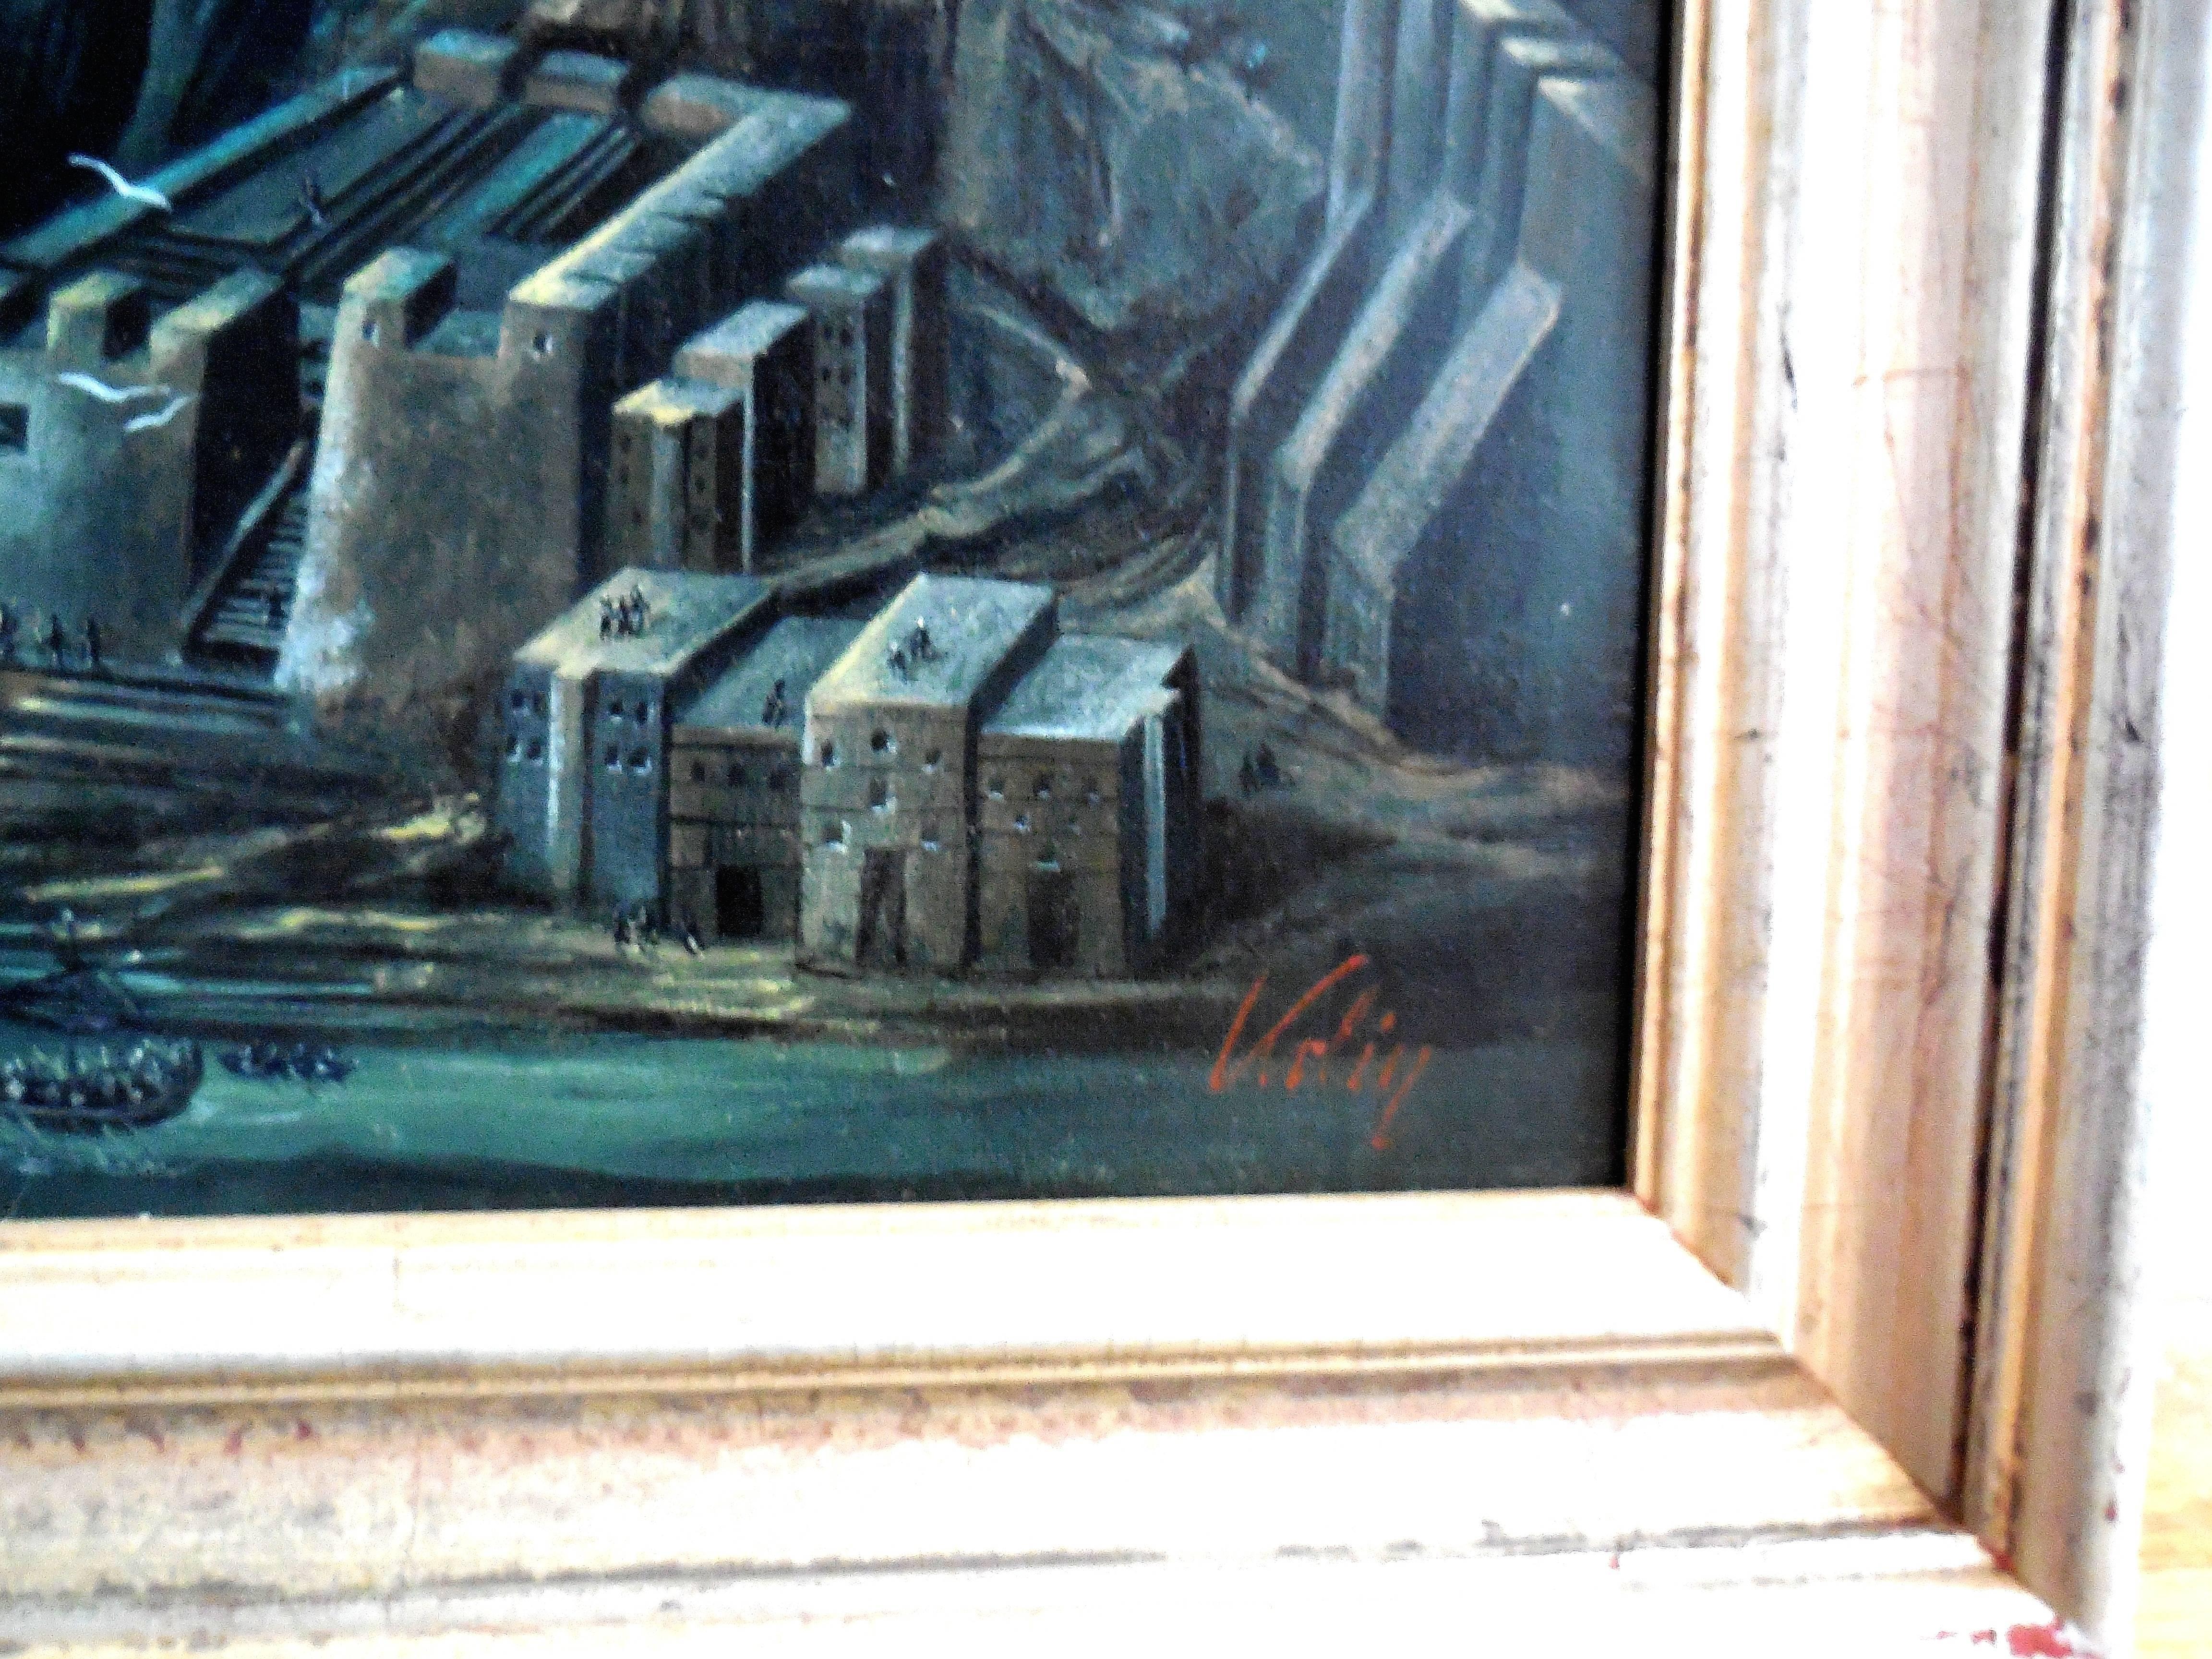 Atlantis, großes surrealistisches Ölgemälde. Wiener Fantastischer Realismus (Surrealismus), Painting, von Peter Kolin